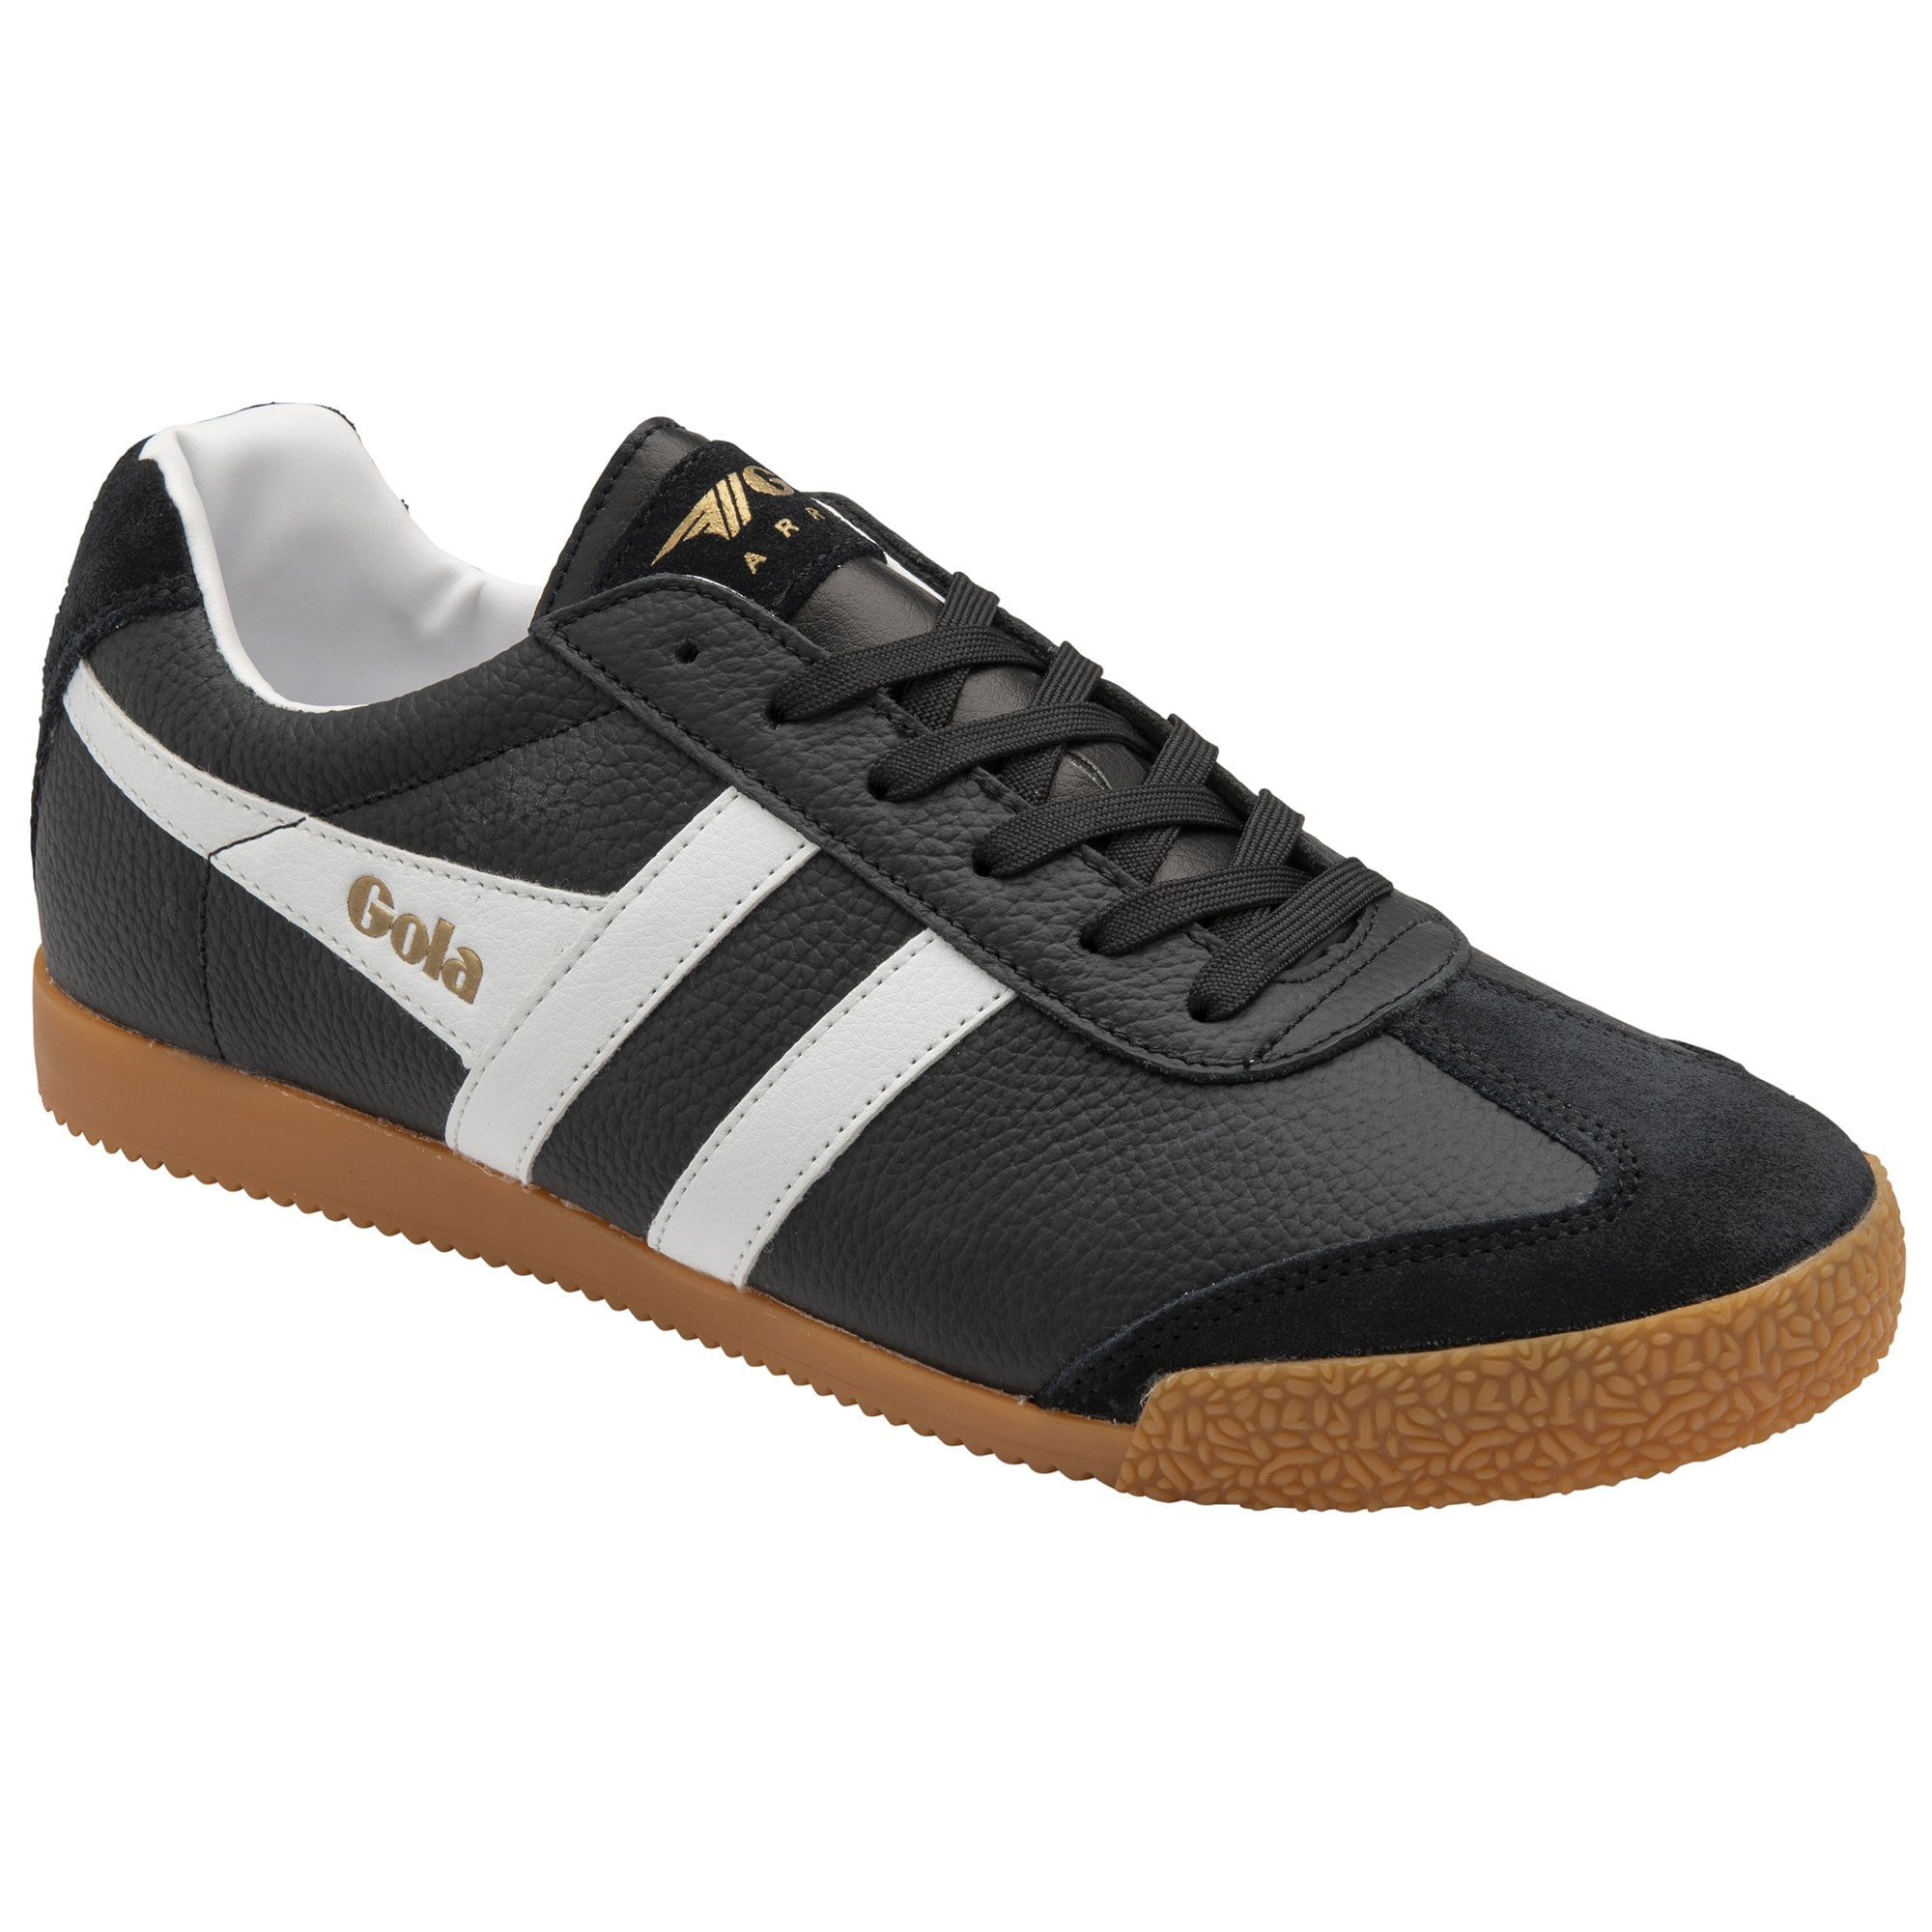 Gola Classics Sneaker Men's Harrier Leather Trainers in Black/White/White